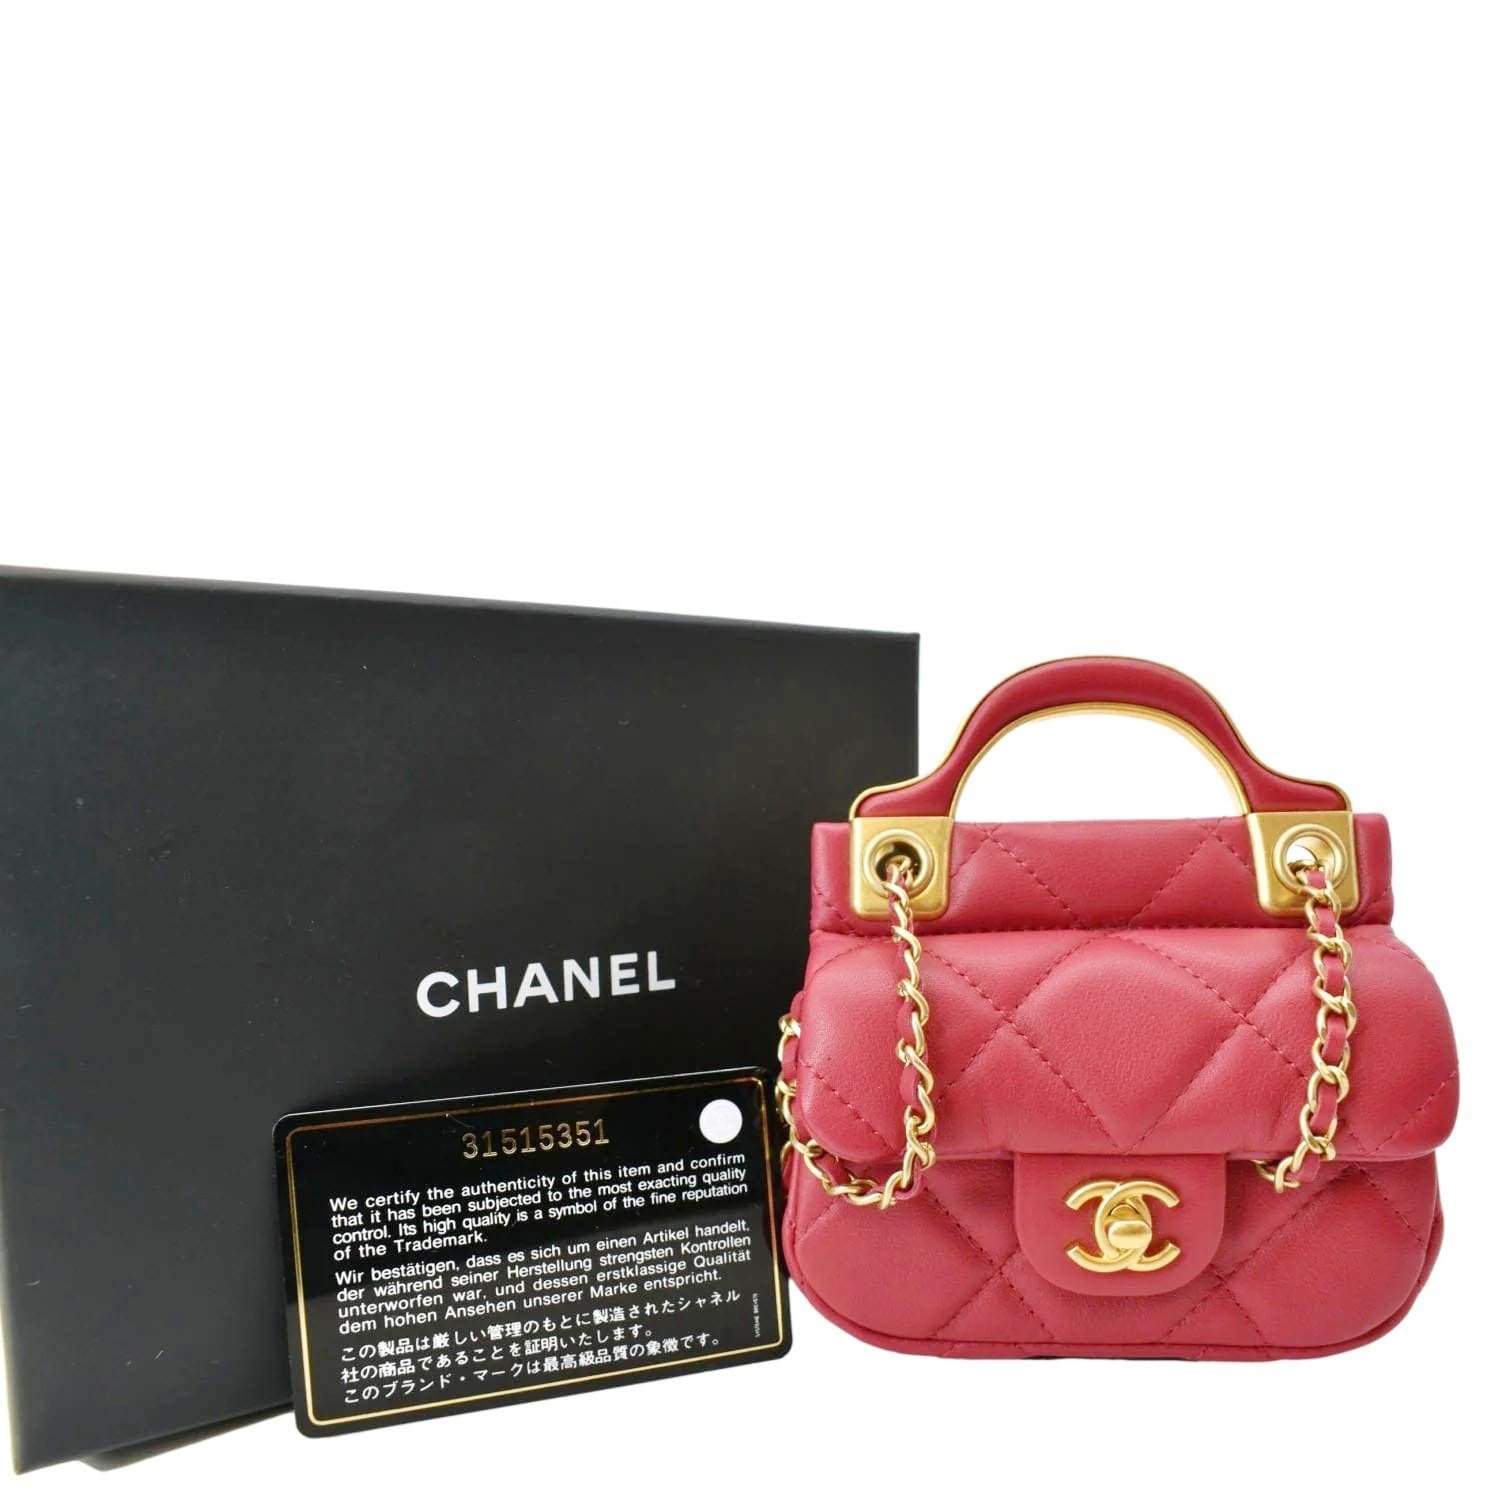 Chanel Mini Rectangular Flap Bag with Top Handle Black Lambskin